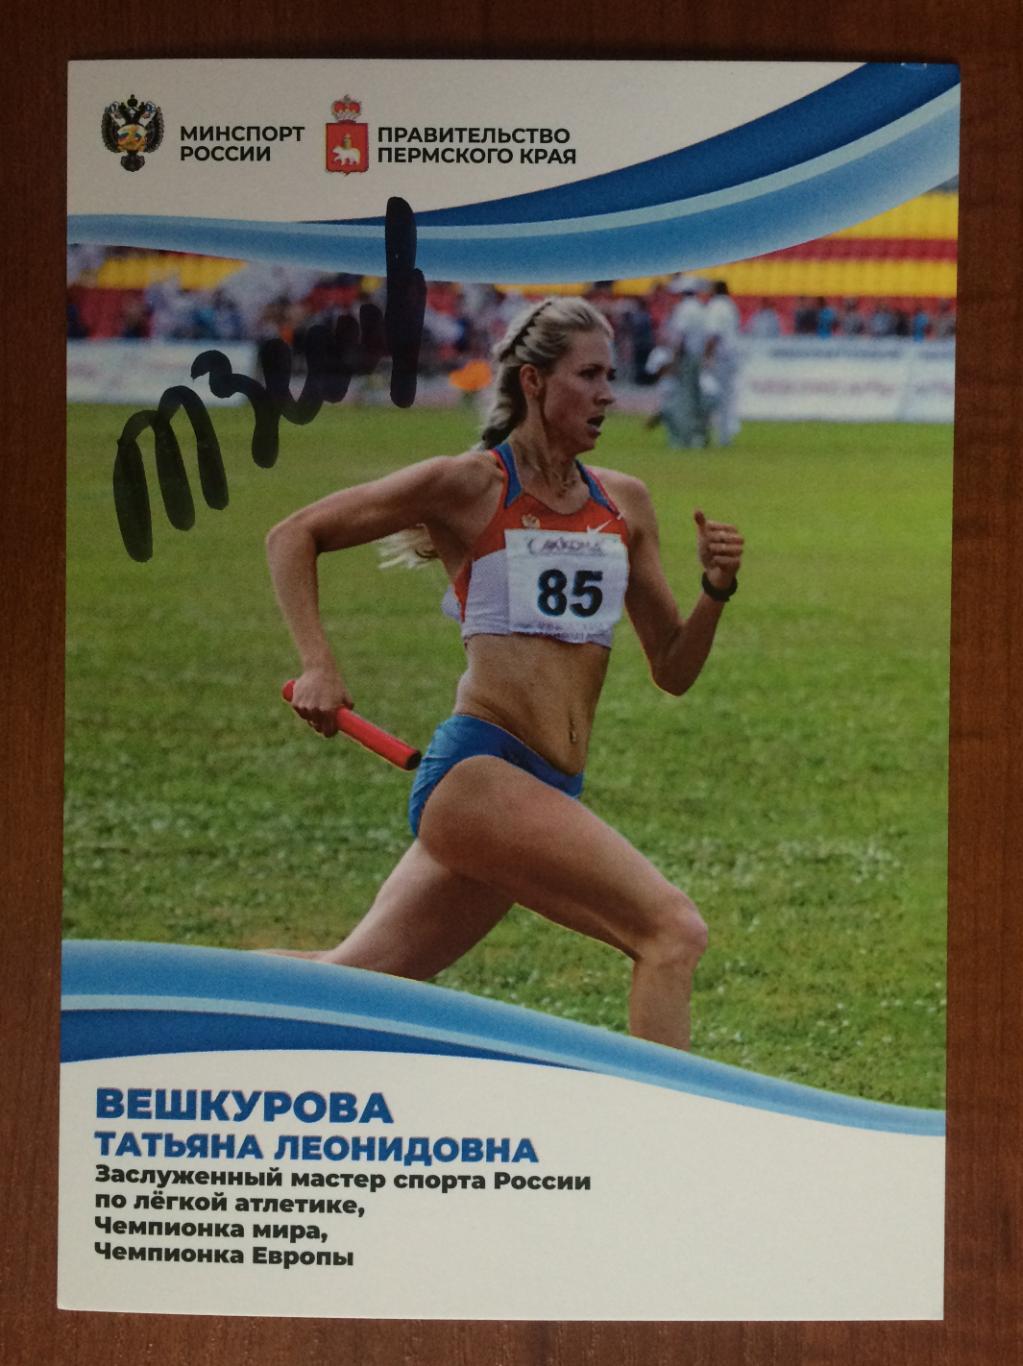 Автограф Татьяна Вешкурова легкая атлетика Олимпиада серебро 2008 год 1